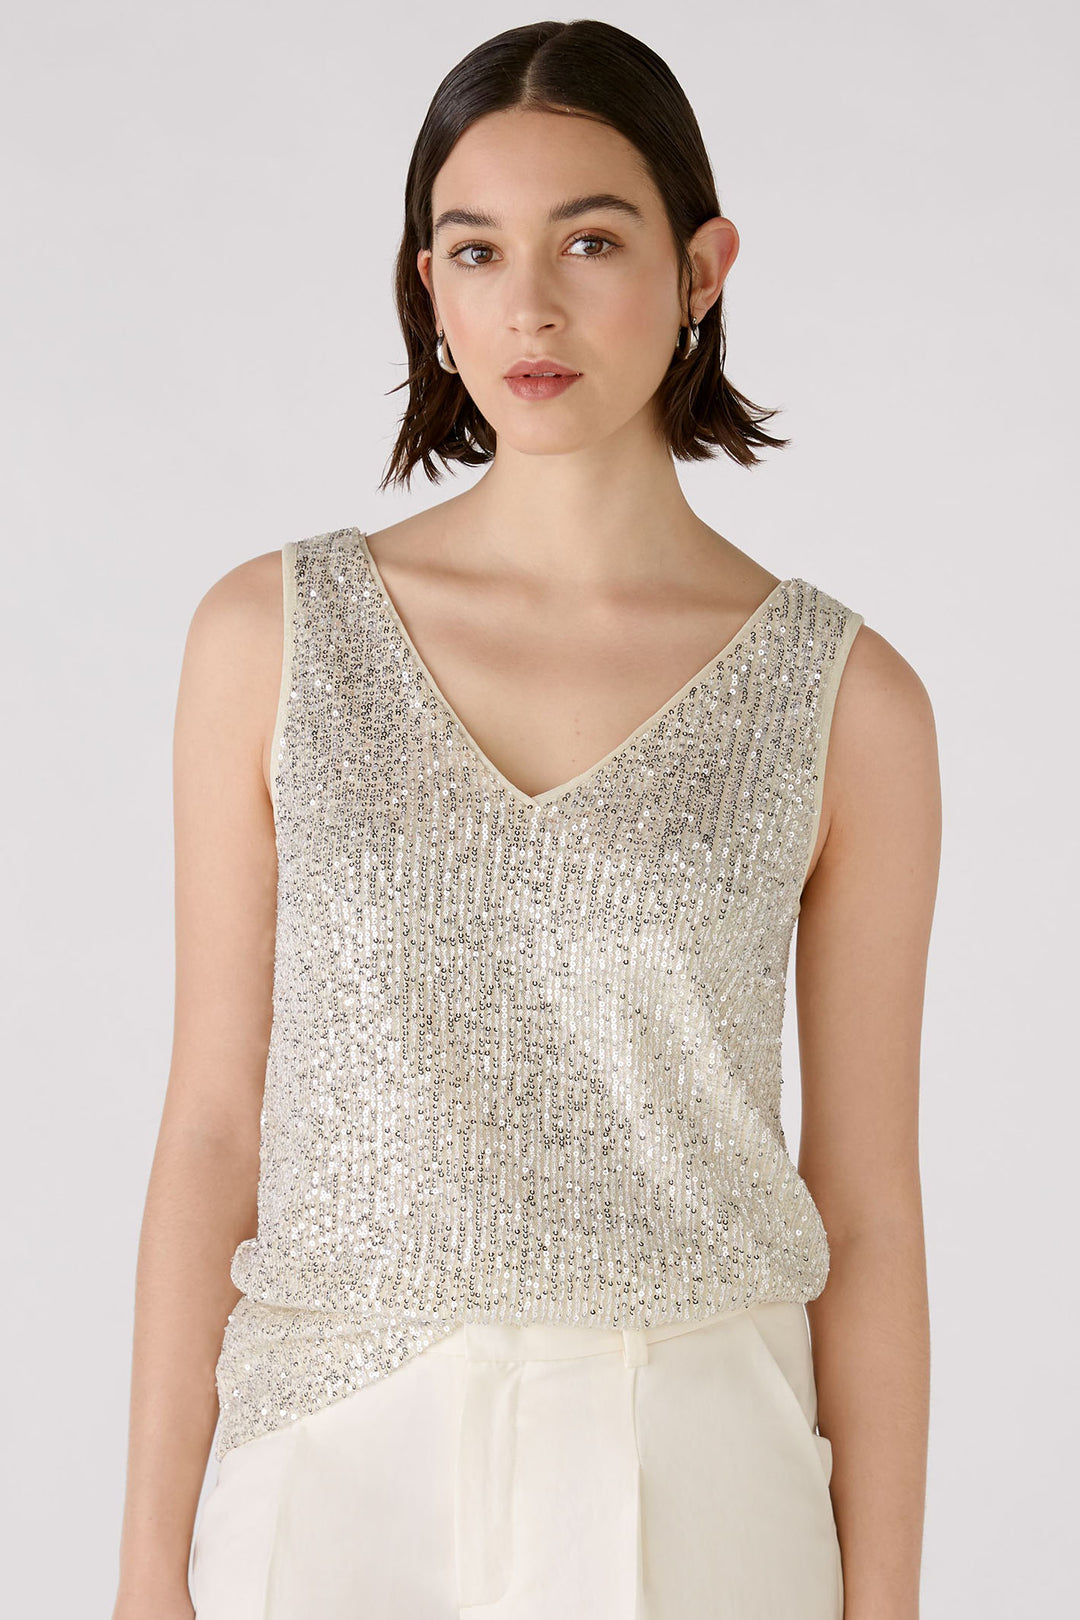 Oui 88306 Off White Silver Sequin Vest Top - Olivia Grace Fashion